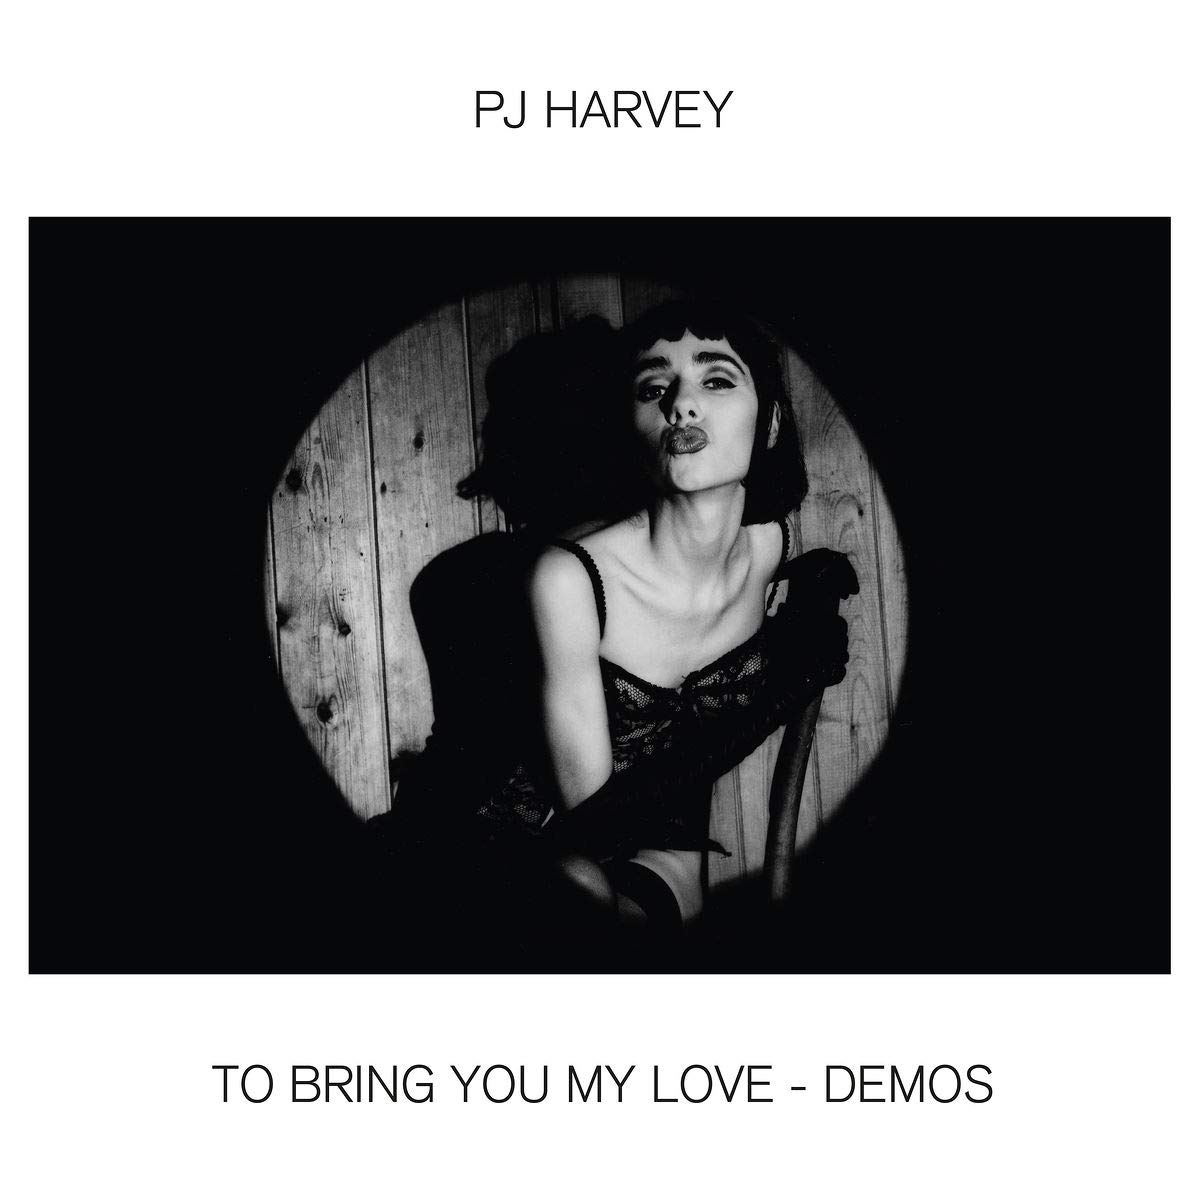 PJ Harvey "To Bring You My Love - Demos" LP